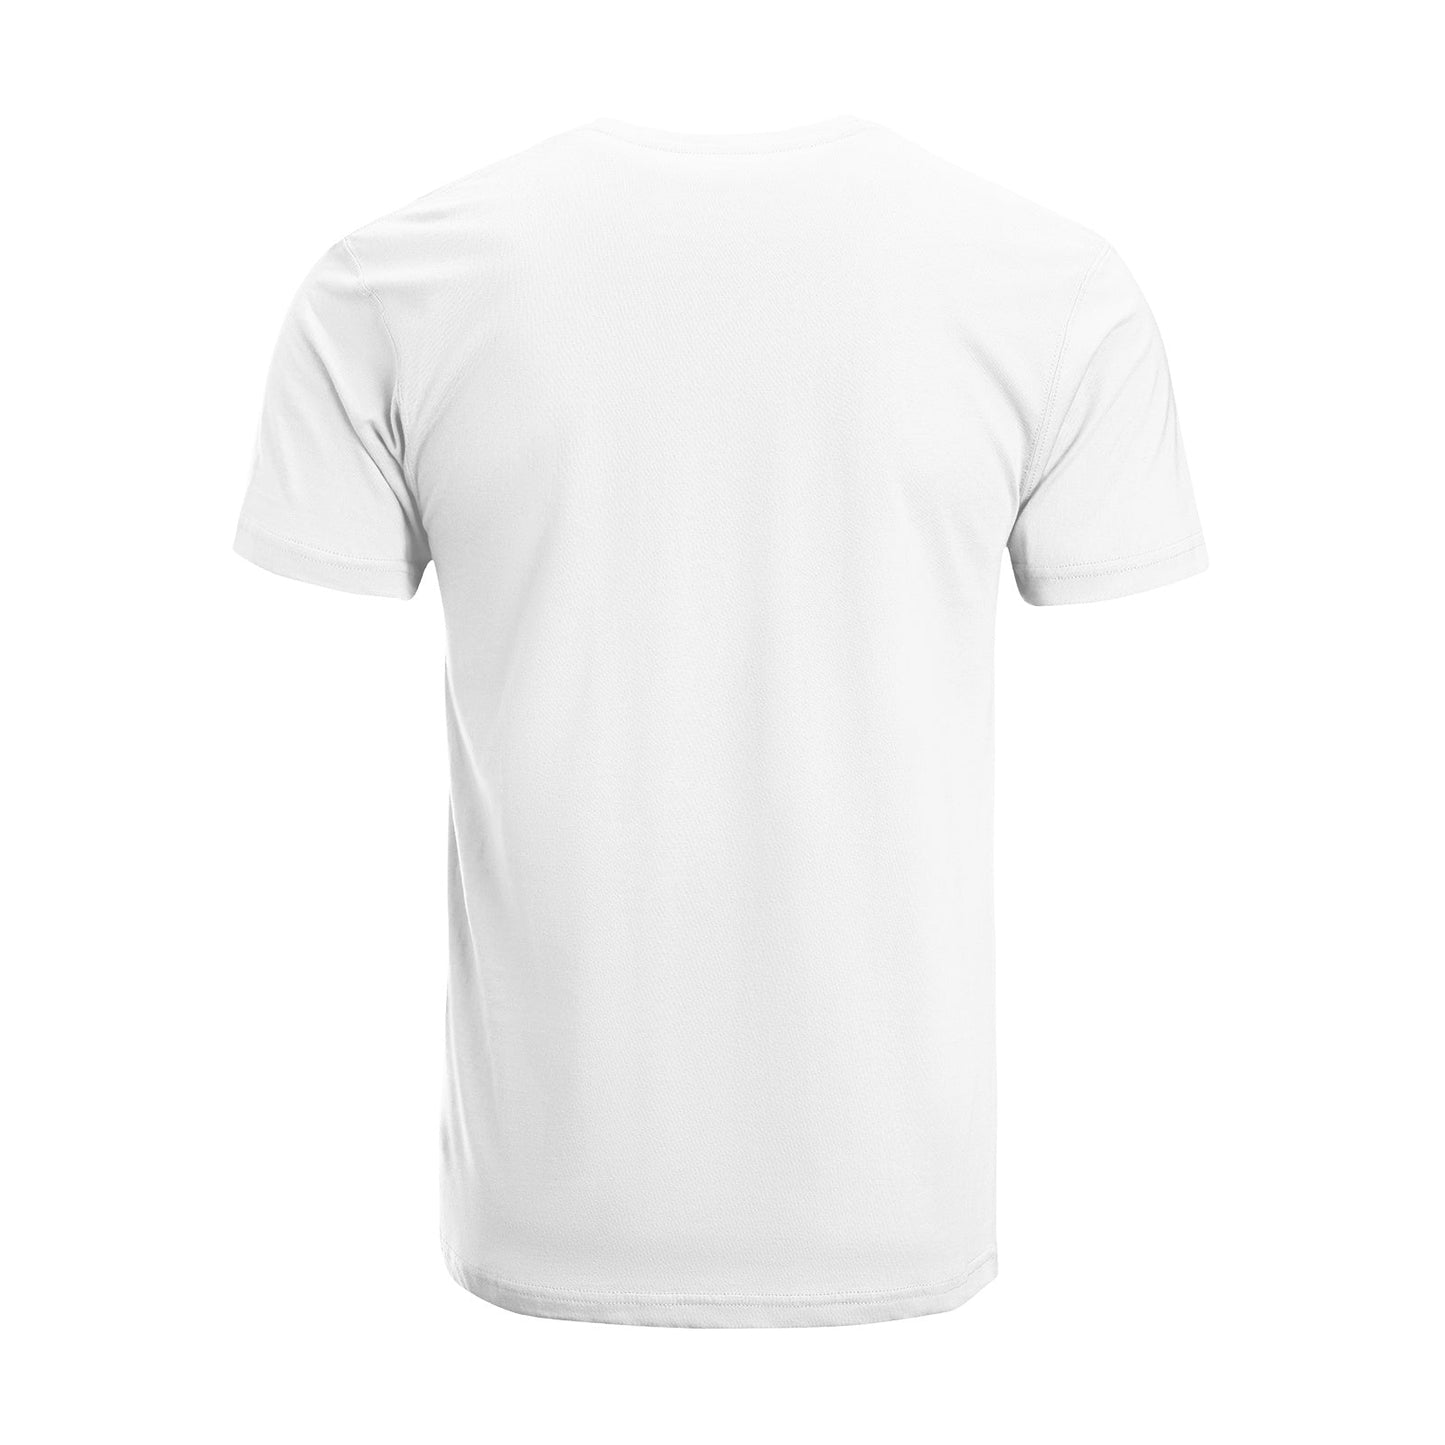 Unisex Short Sleeve Crew Neck Cotton Jersey T-Shirt VEGAN 25